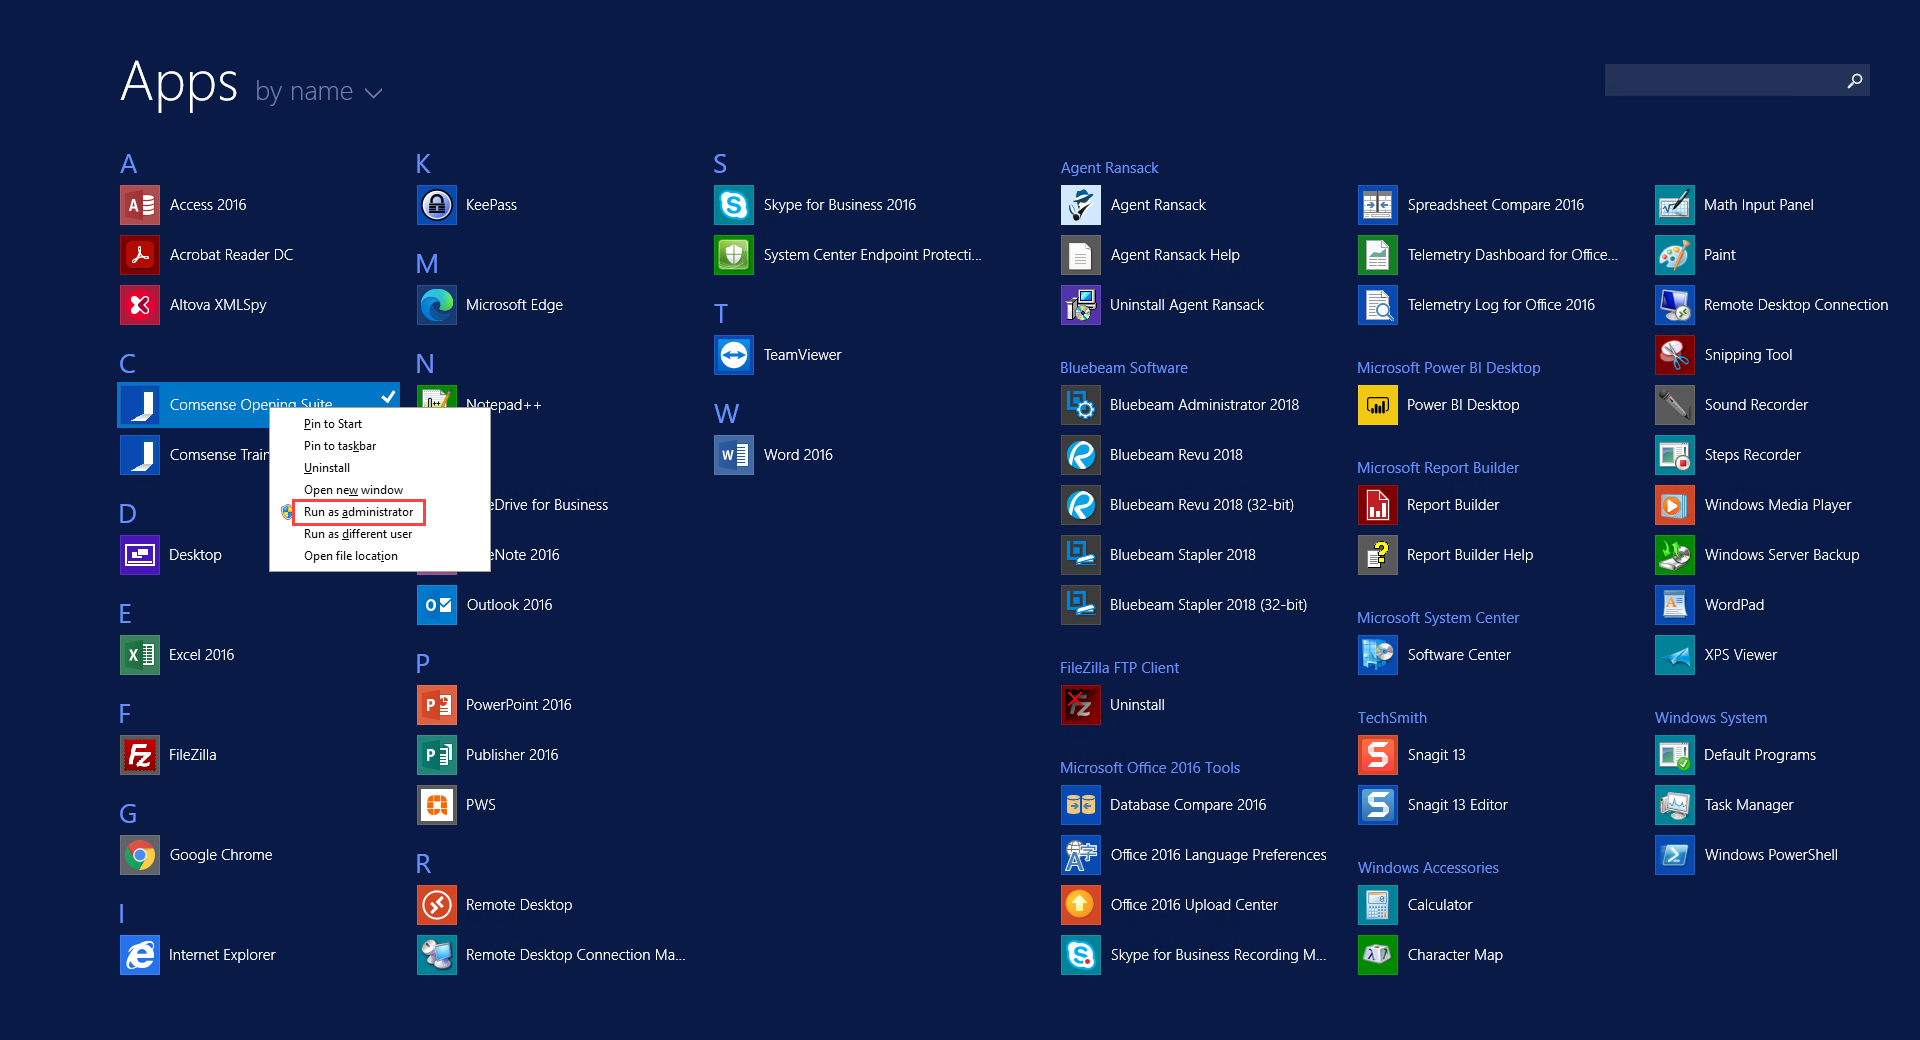 Windows 10 start menu; Shows the pathway to Run as administrator.